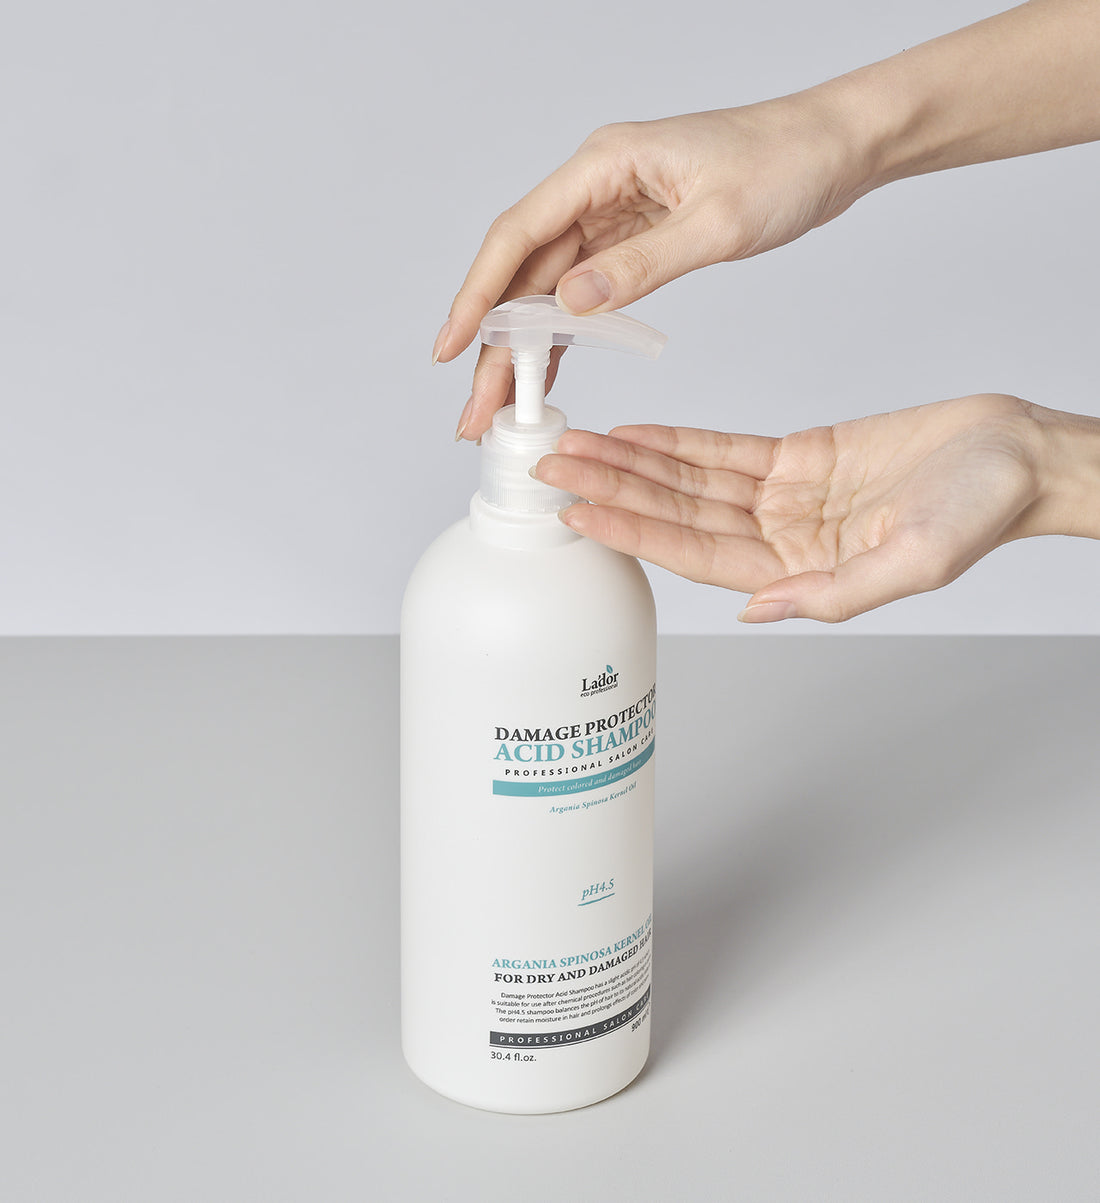 LADOR Damage Protector Acid Shampoo, 900ml